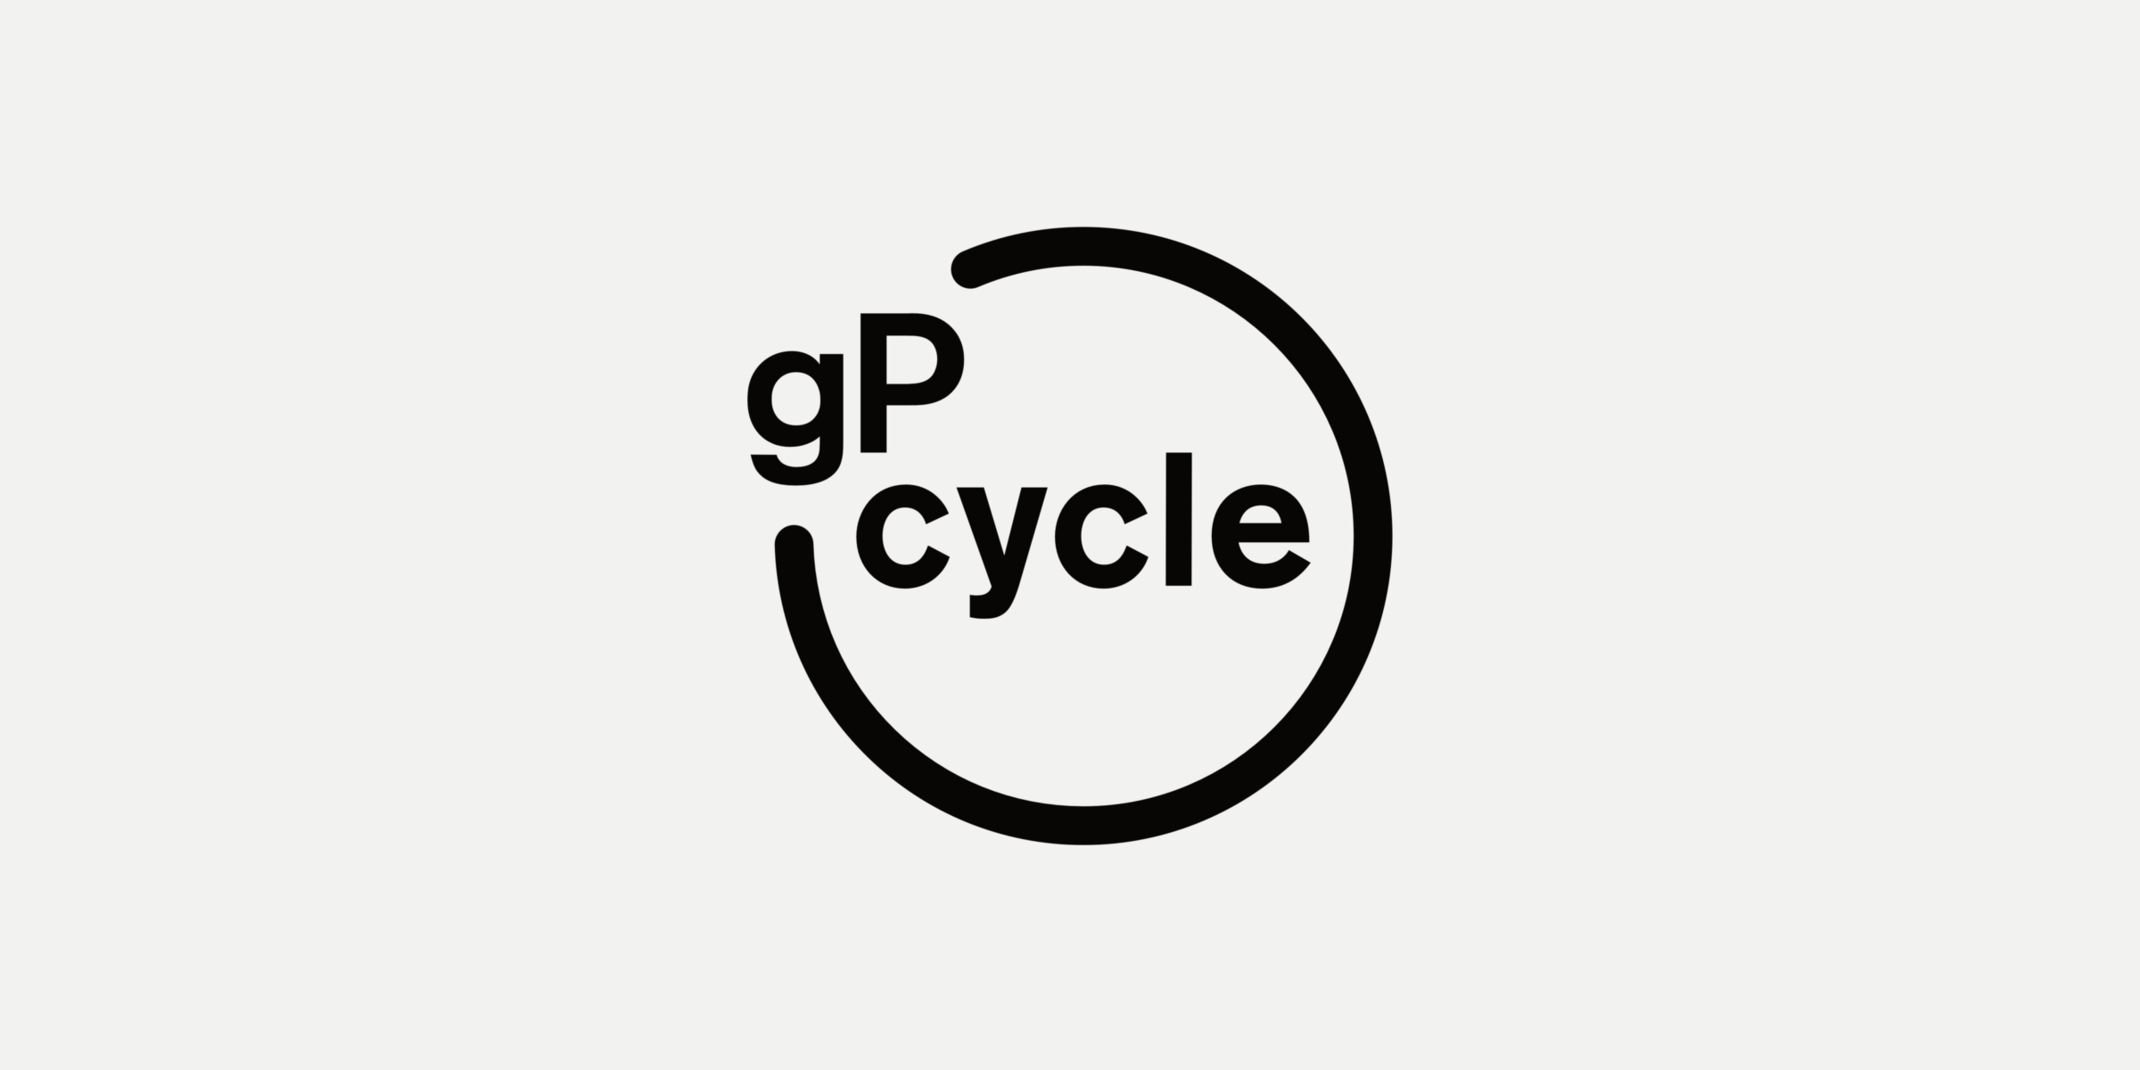 Kachel_gP cycle